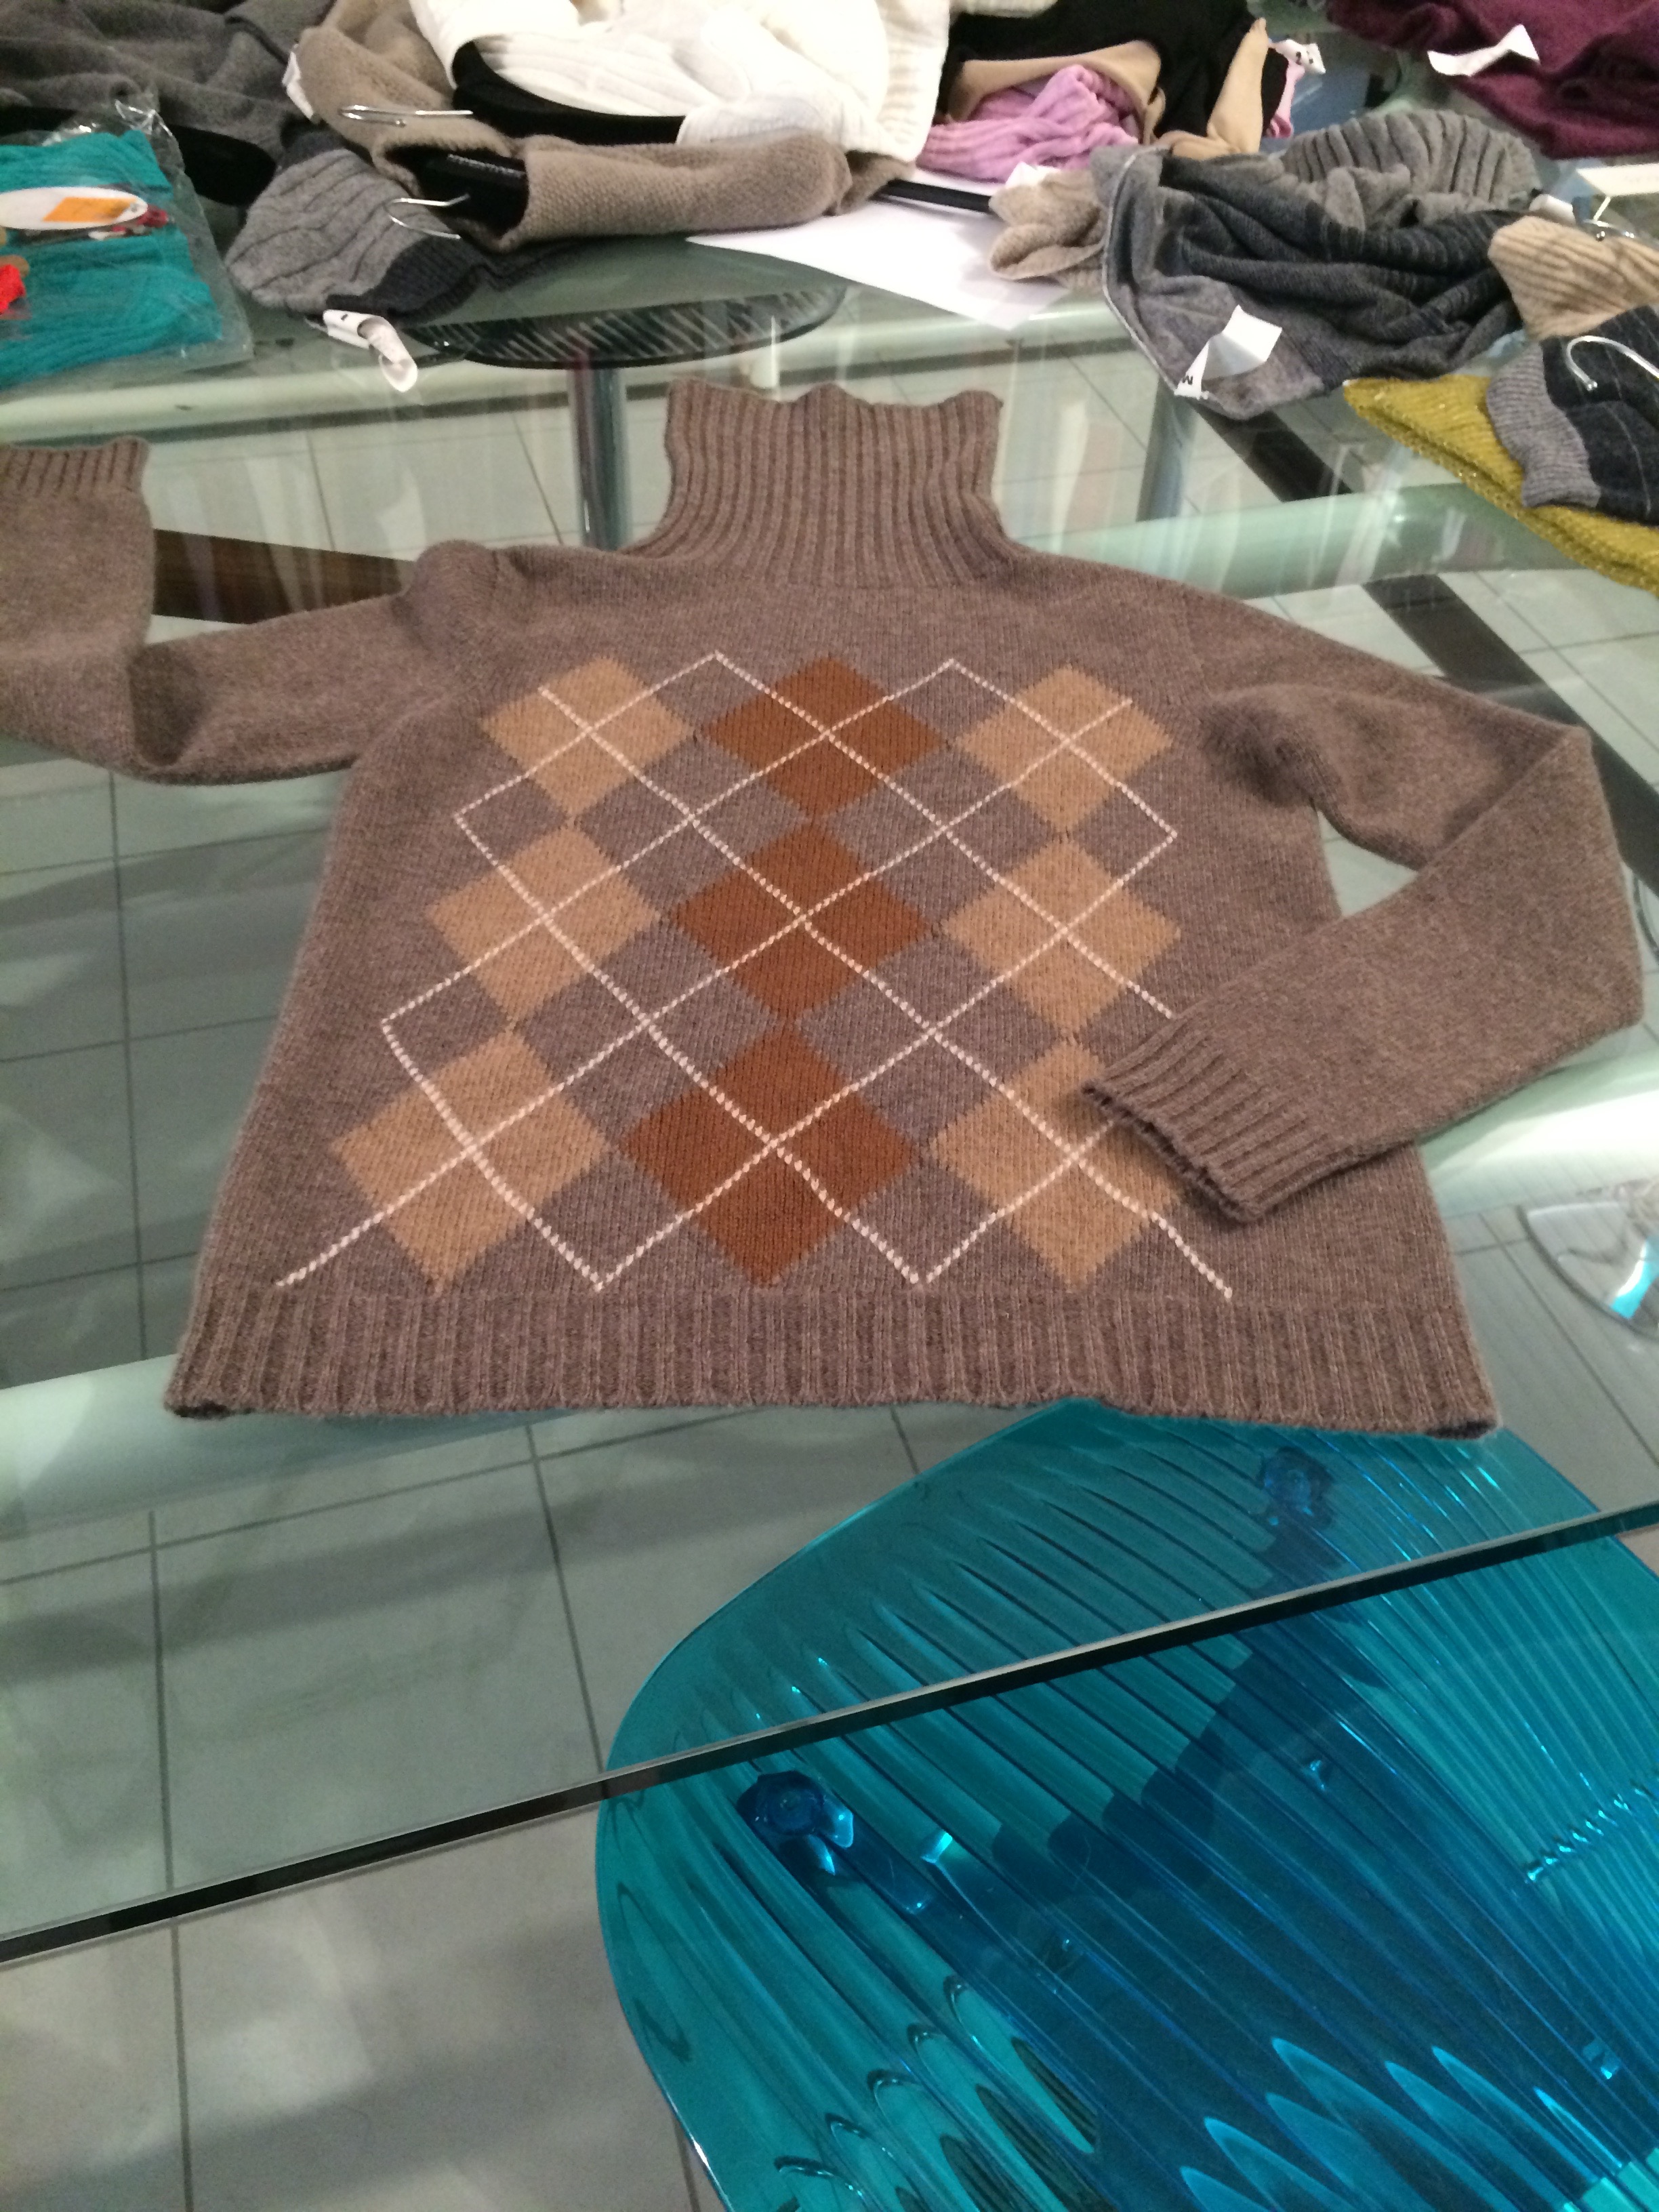 MIND ‘Ballantyne’ style intarsia WHOLEGARMENT sweater knitted on Shima Seiki FIRST184L 7 gauge.